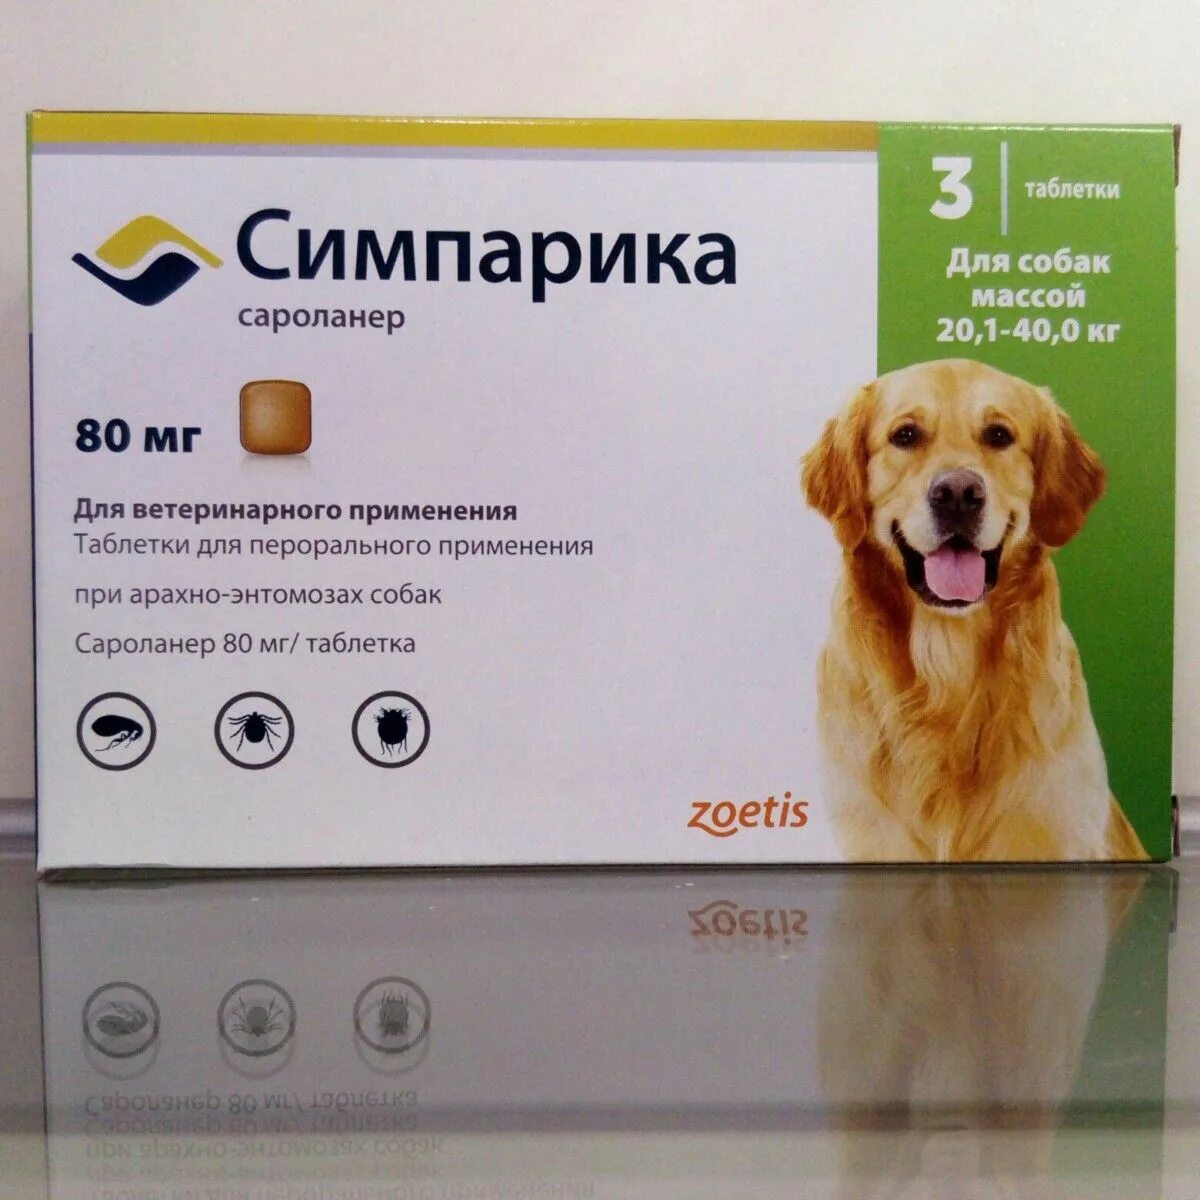 Где купить таблетки от клещей. Симпарика 2,5-5. Симпарика 20 мг. Симпарика таблетка 10-20 кг. Simparica Симпарика таблетки для собак.